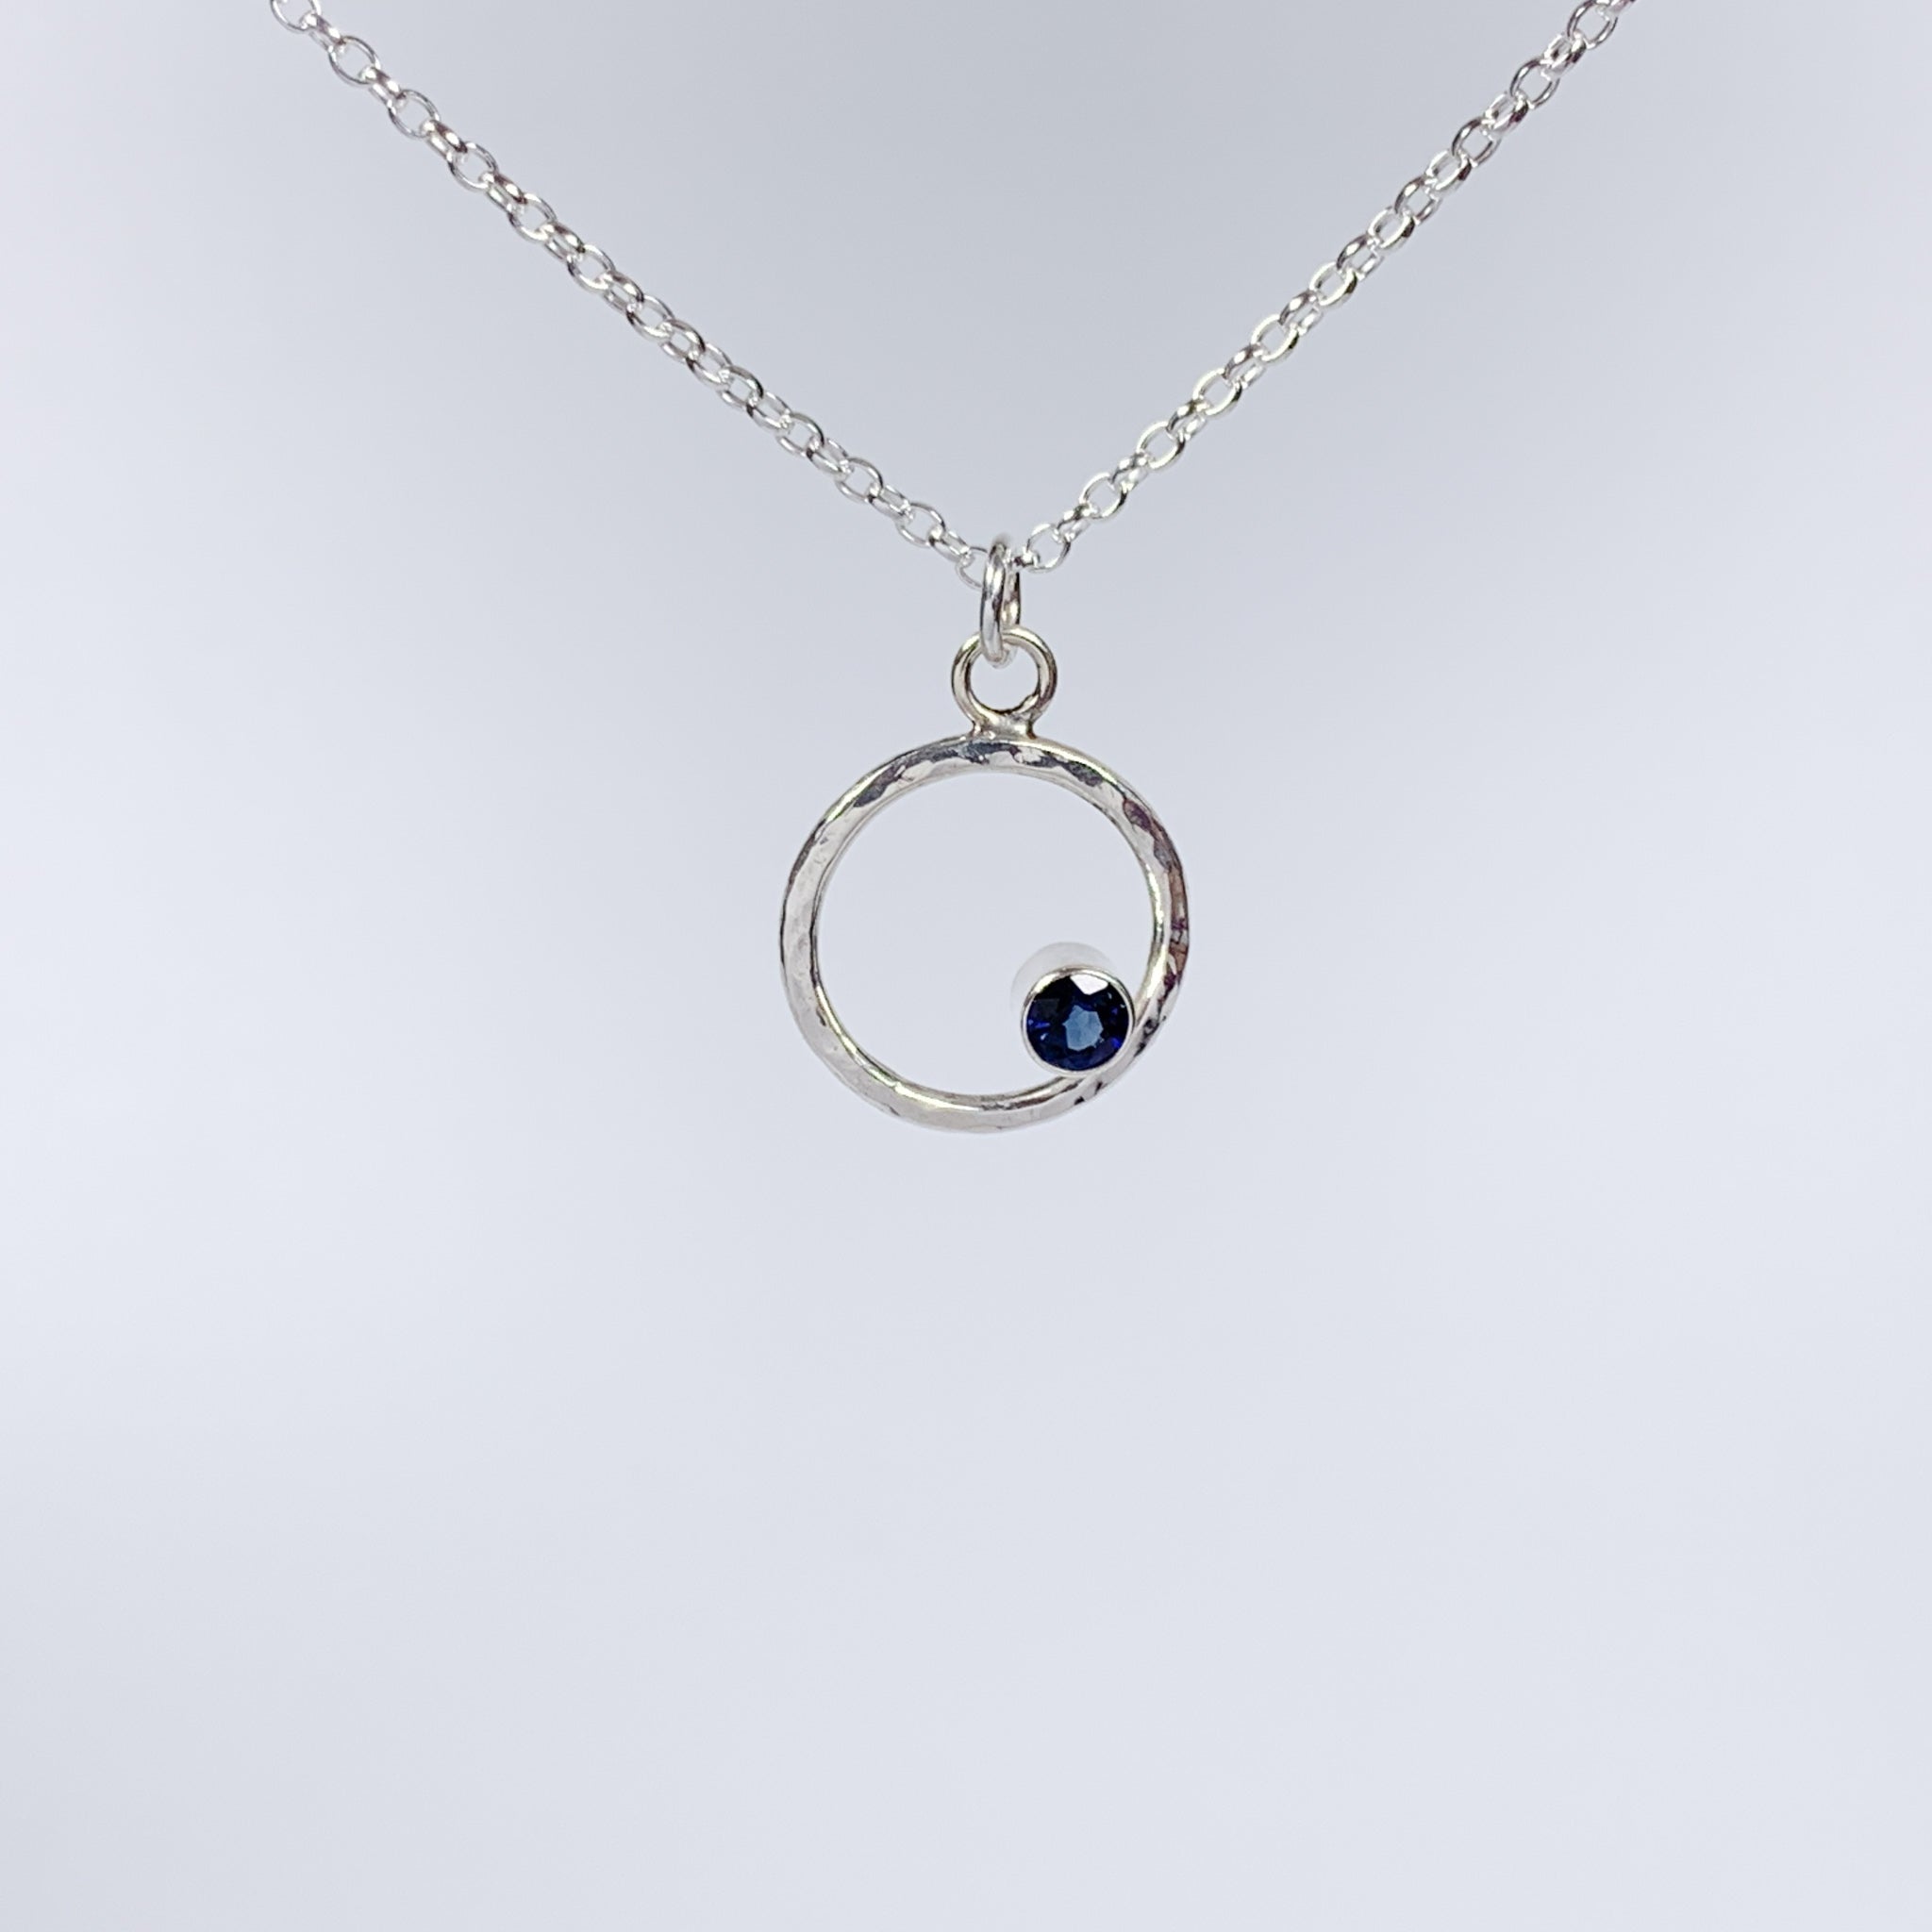 Caldera Eclissi Blue Sapphire Silver Pendant Necklace